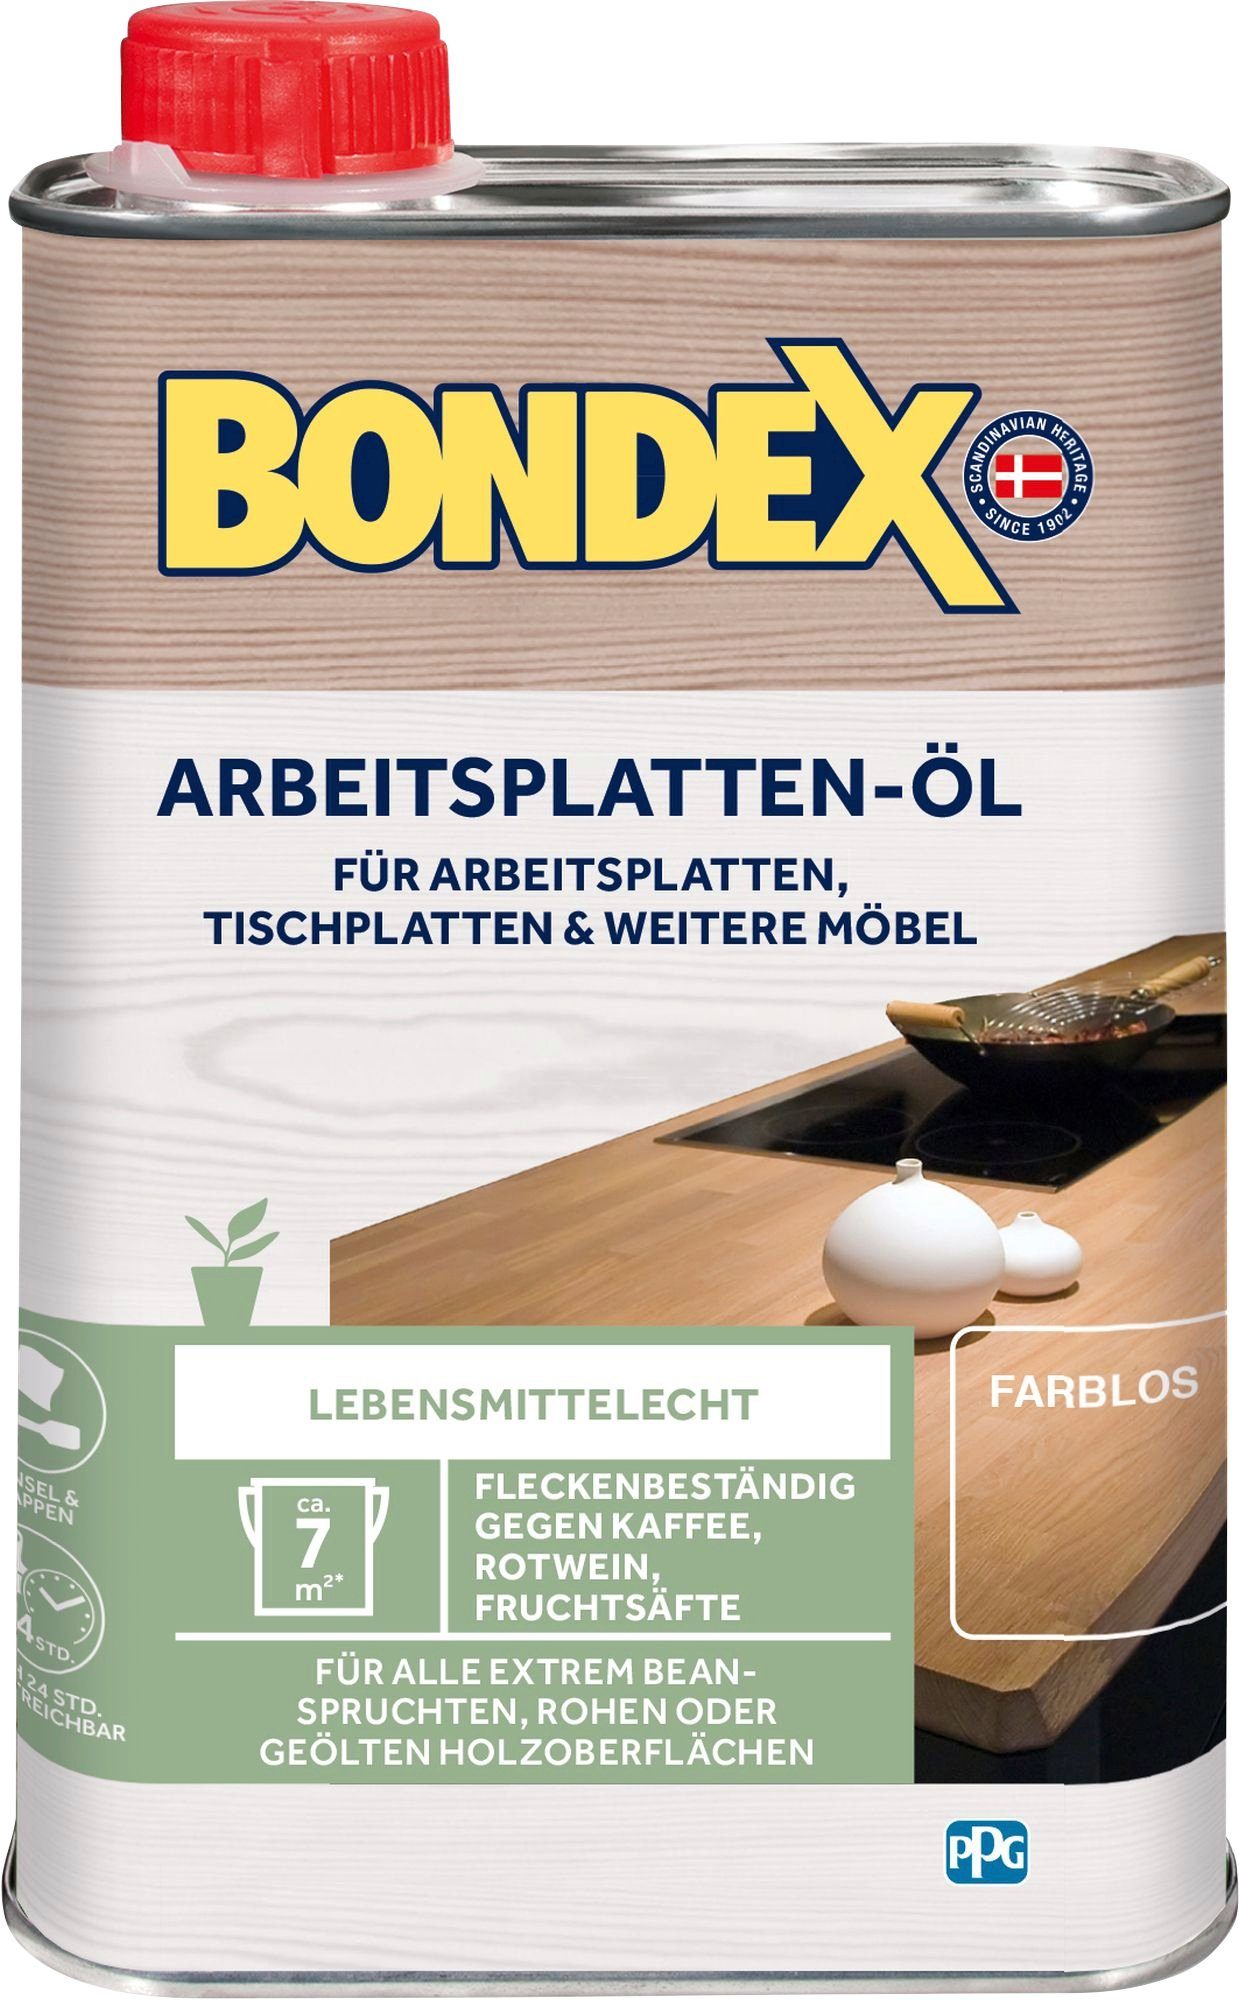 Liter Bondex Holzöl Inhalt Farblos, ARBEITSPLATTEN-ÖL, 0,5